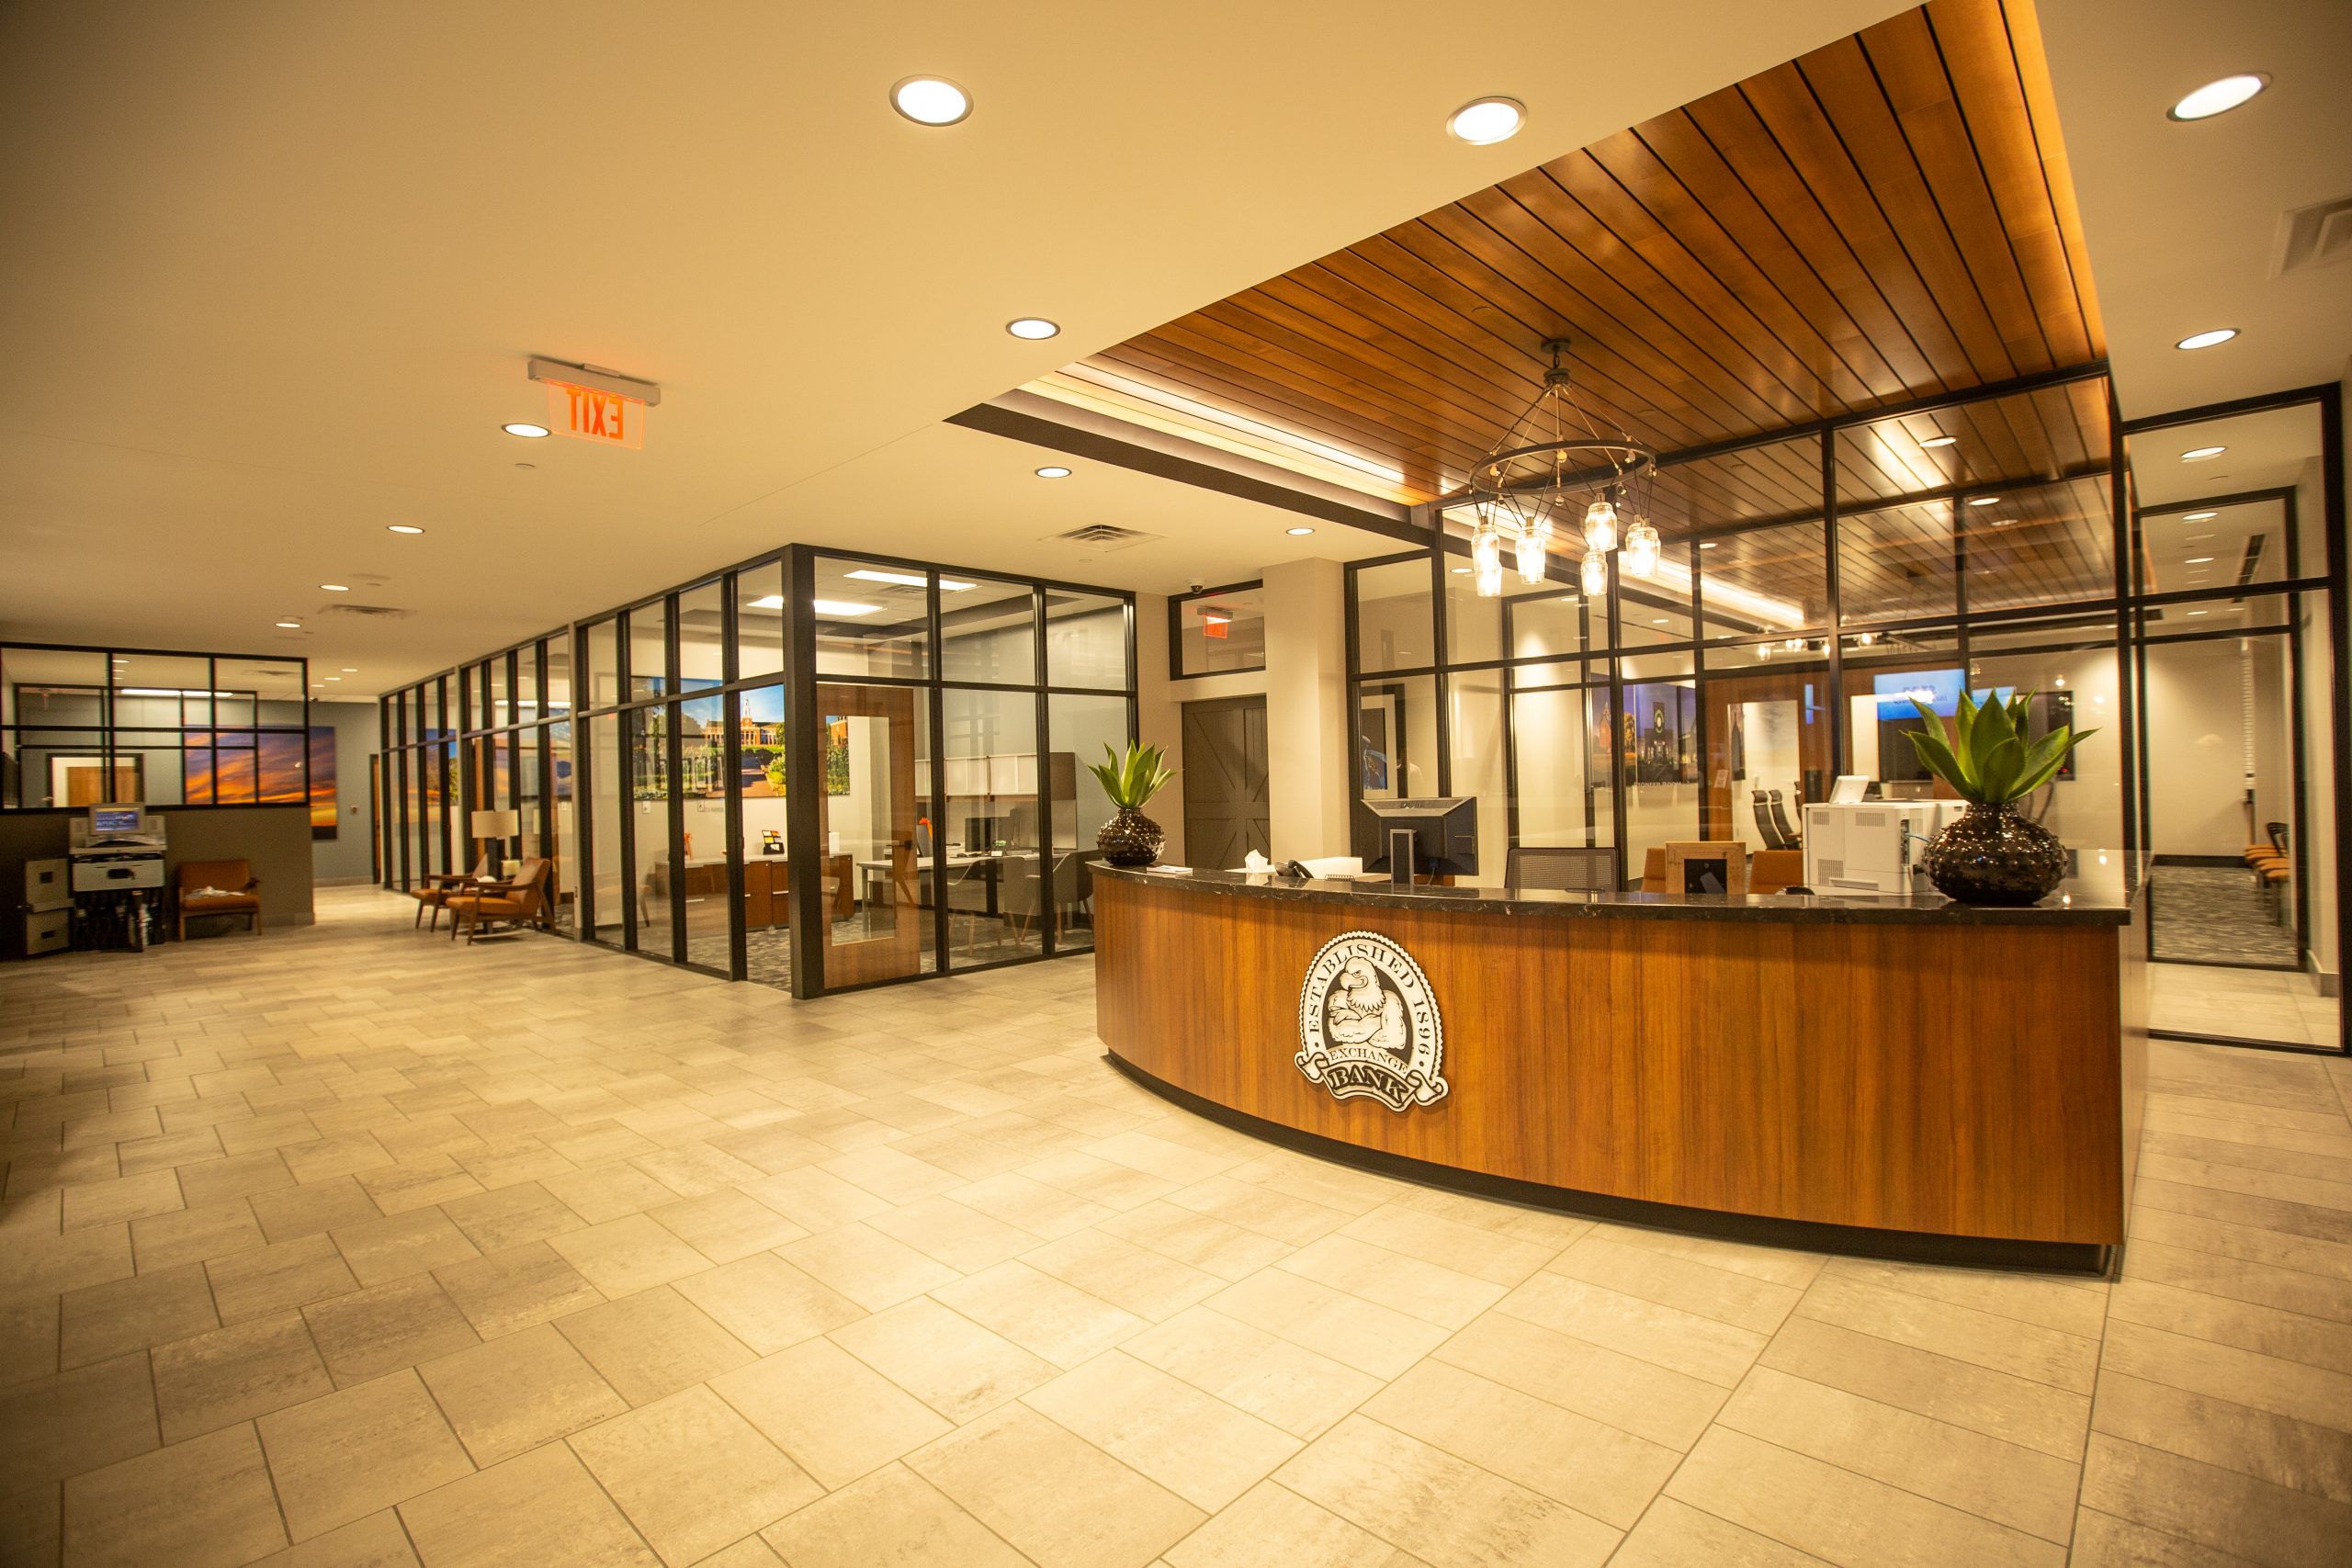 Exchange Bank Reception and Lobby, Stillwater OK